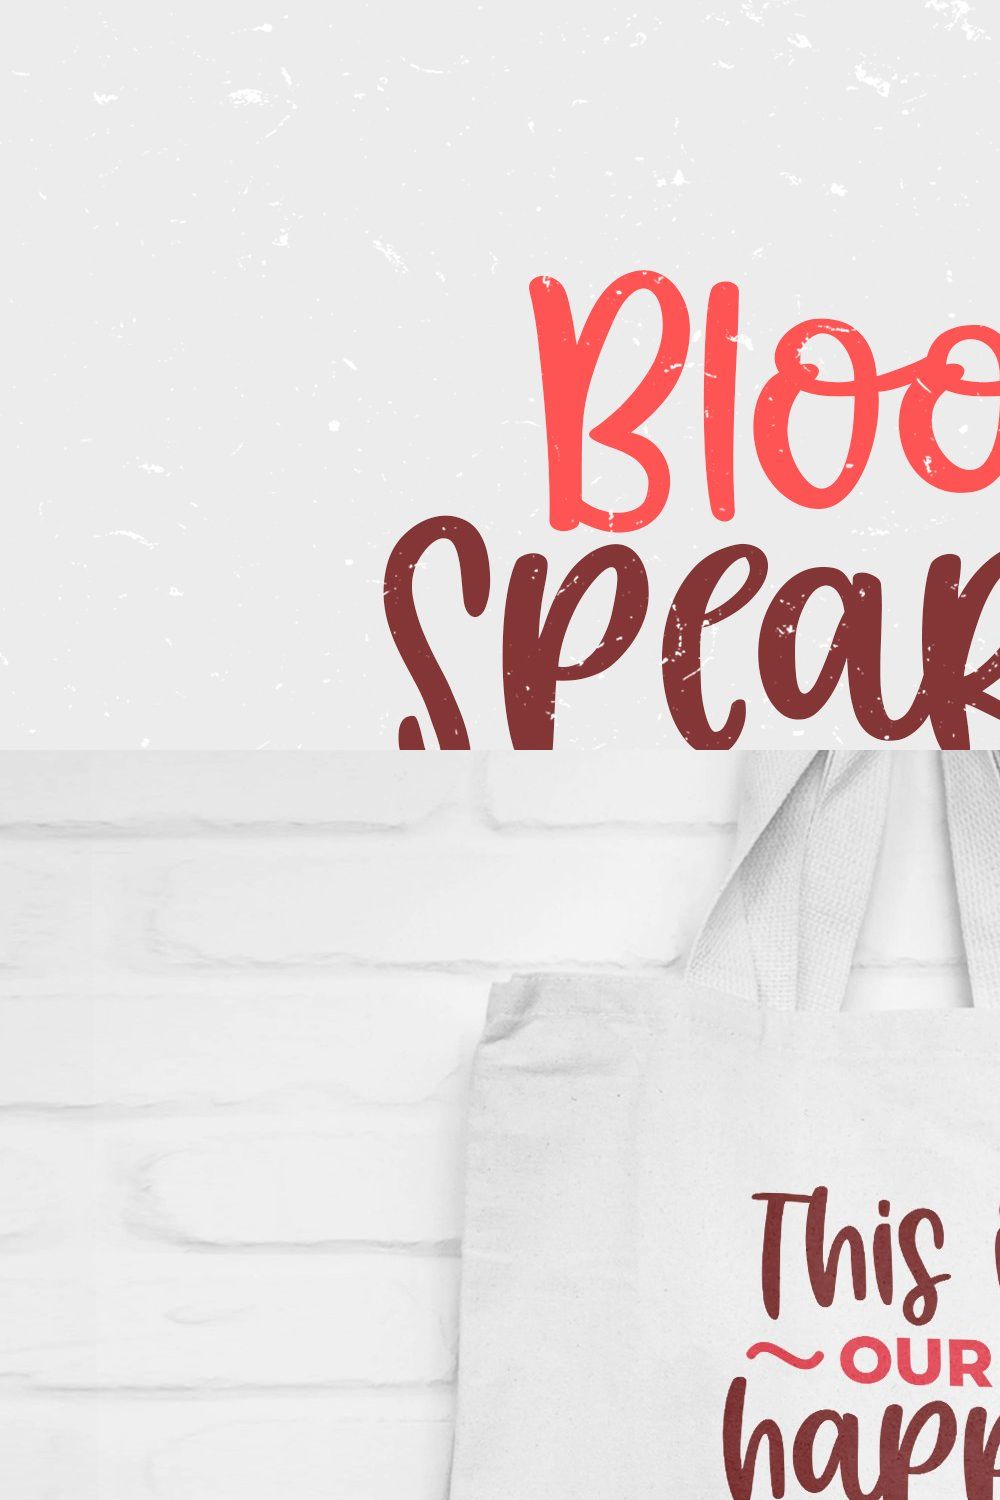 Bloods Spearing | handwritten font pinterest preview image.